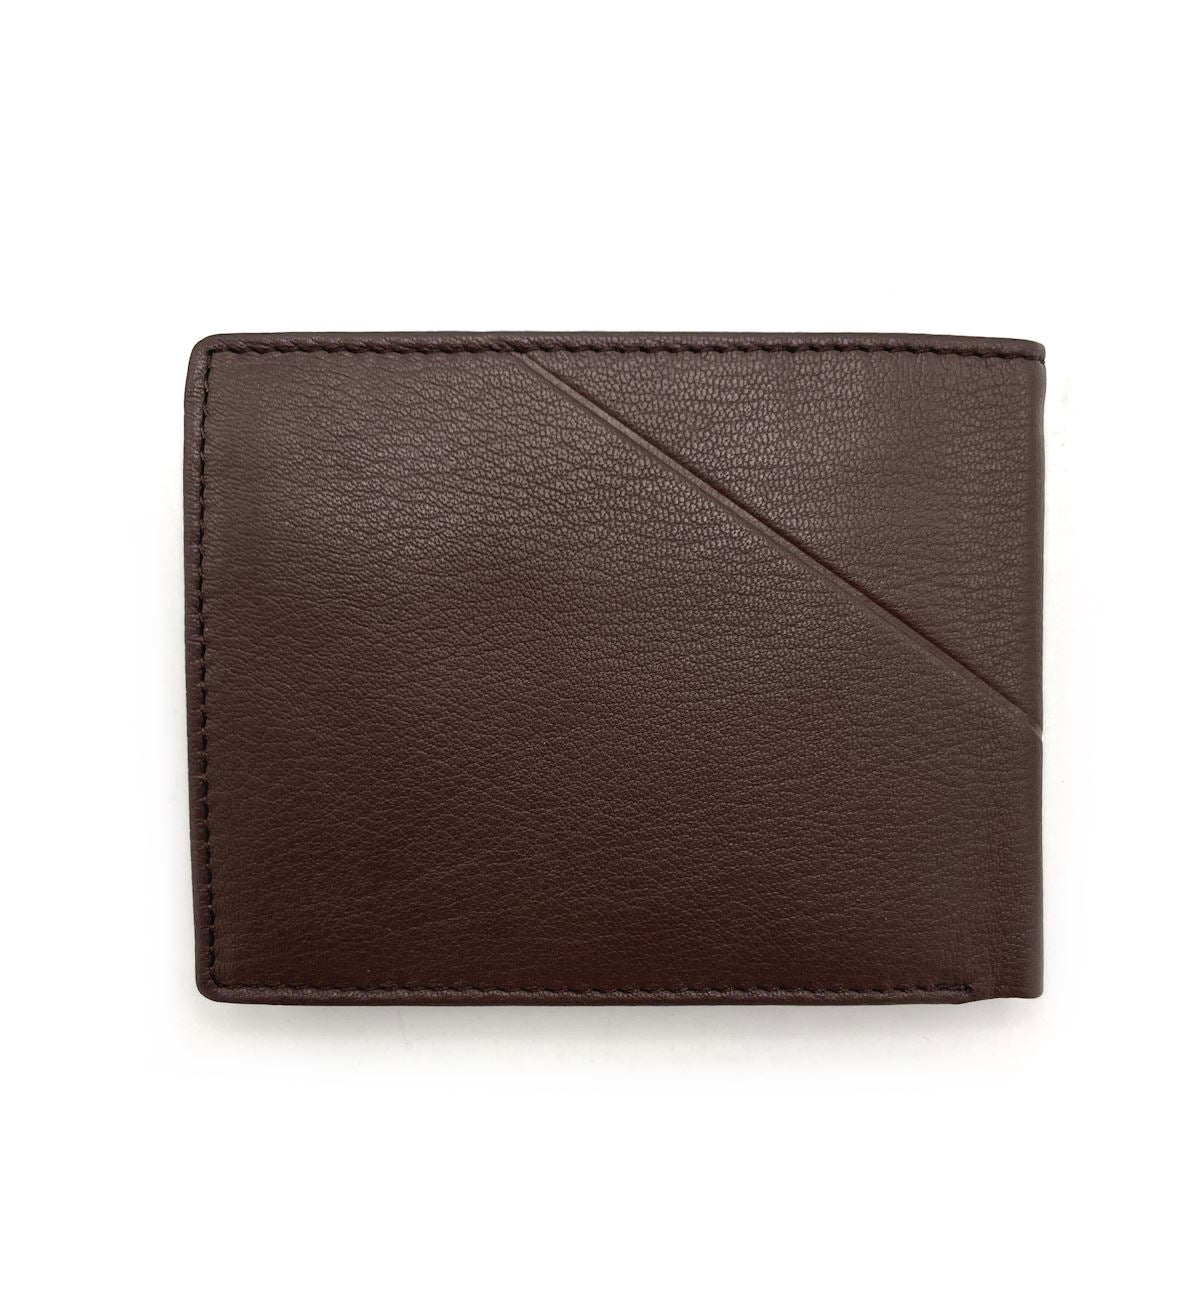 Genuine leather Wallet, Brand EC COVERI, art. EC23761-06